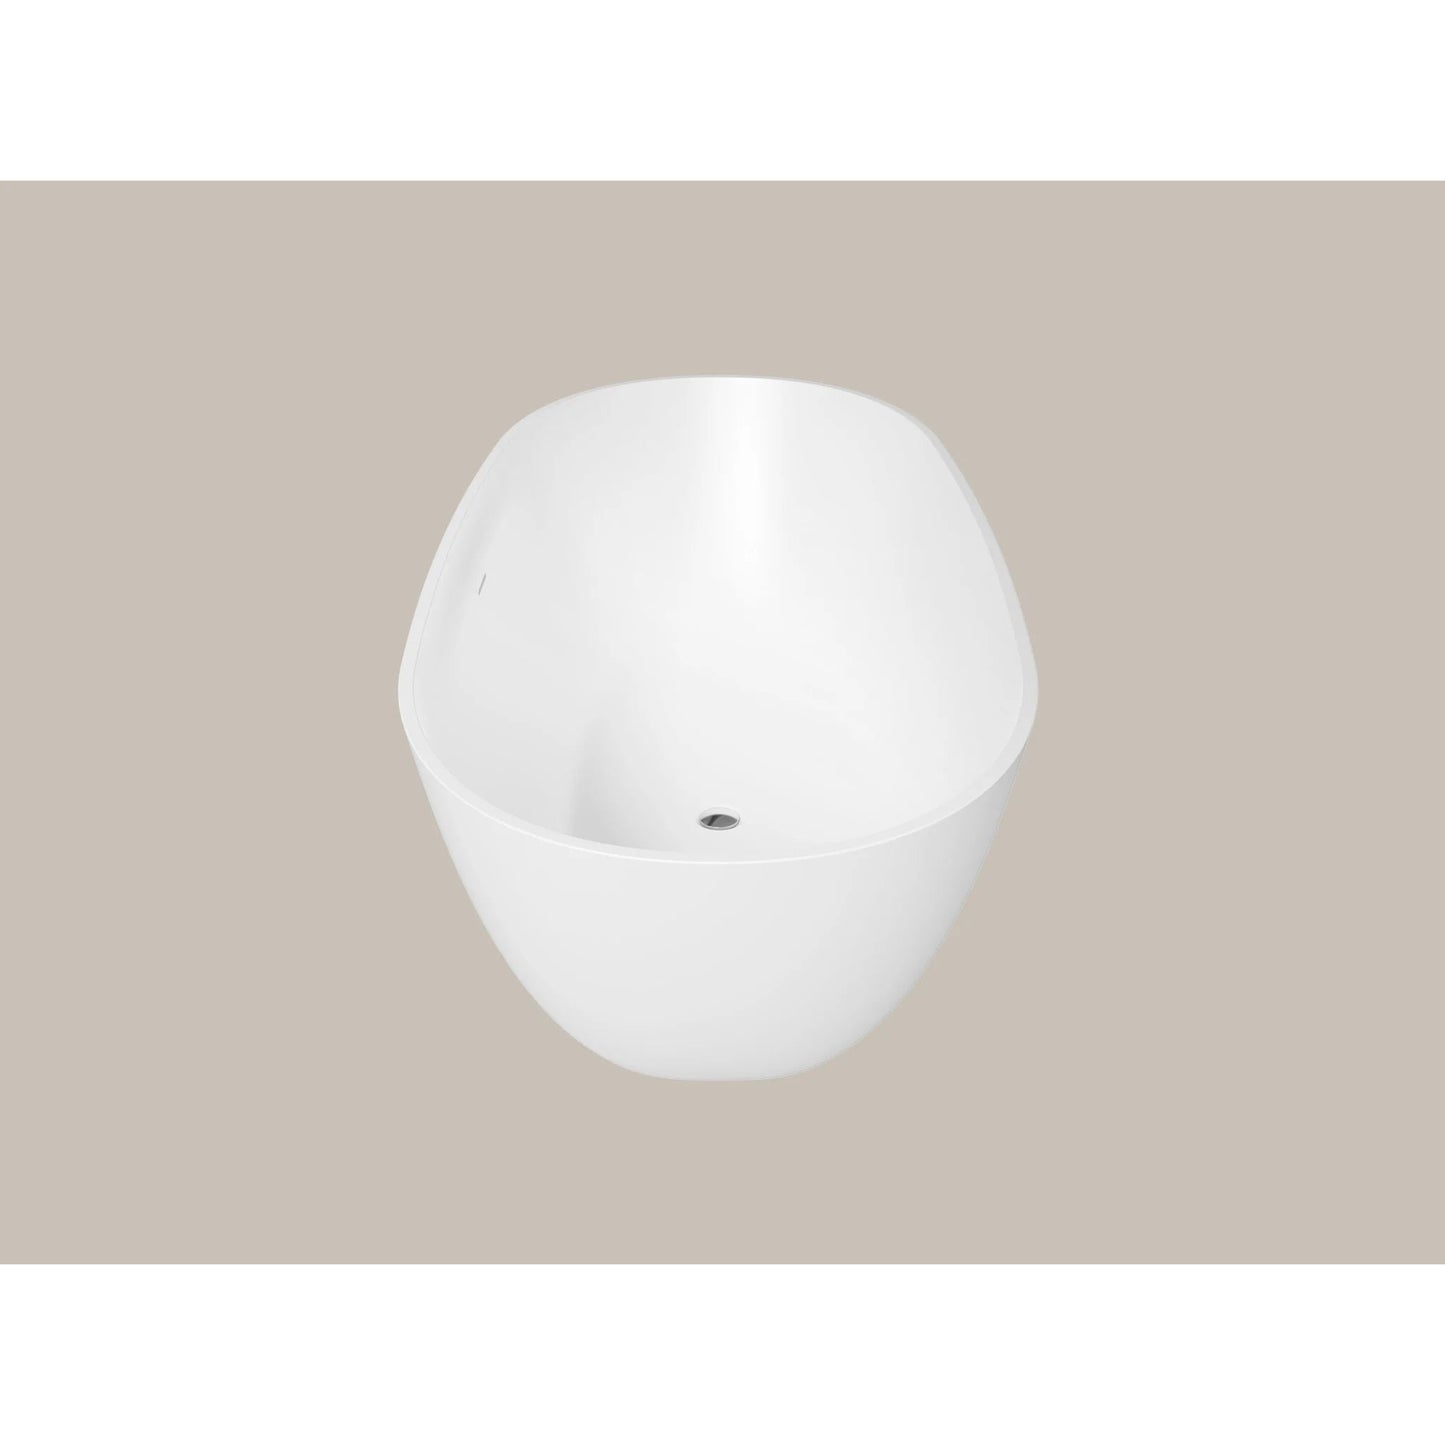 LaToscana Eco-Lapistone Genova 70" White Satin Freestanding Solid Surface Soaking Bathtub